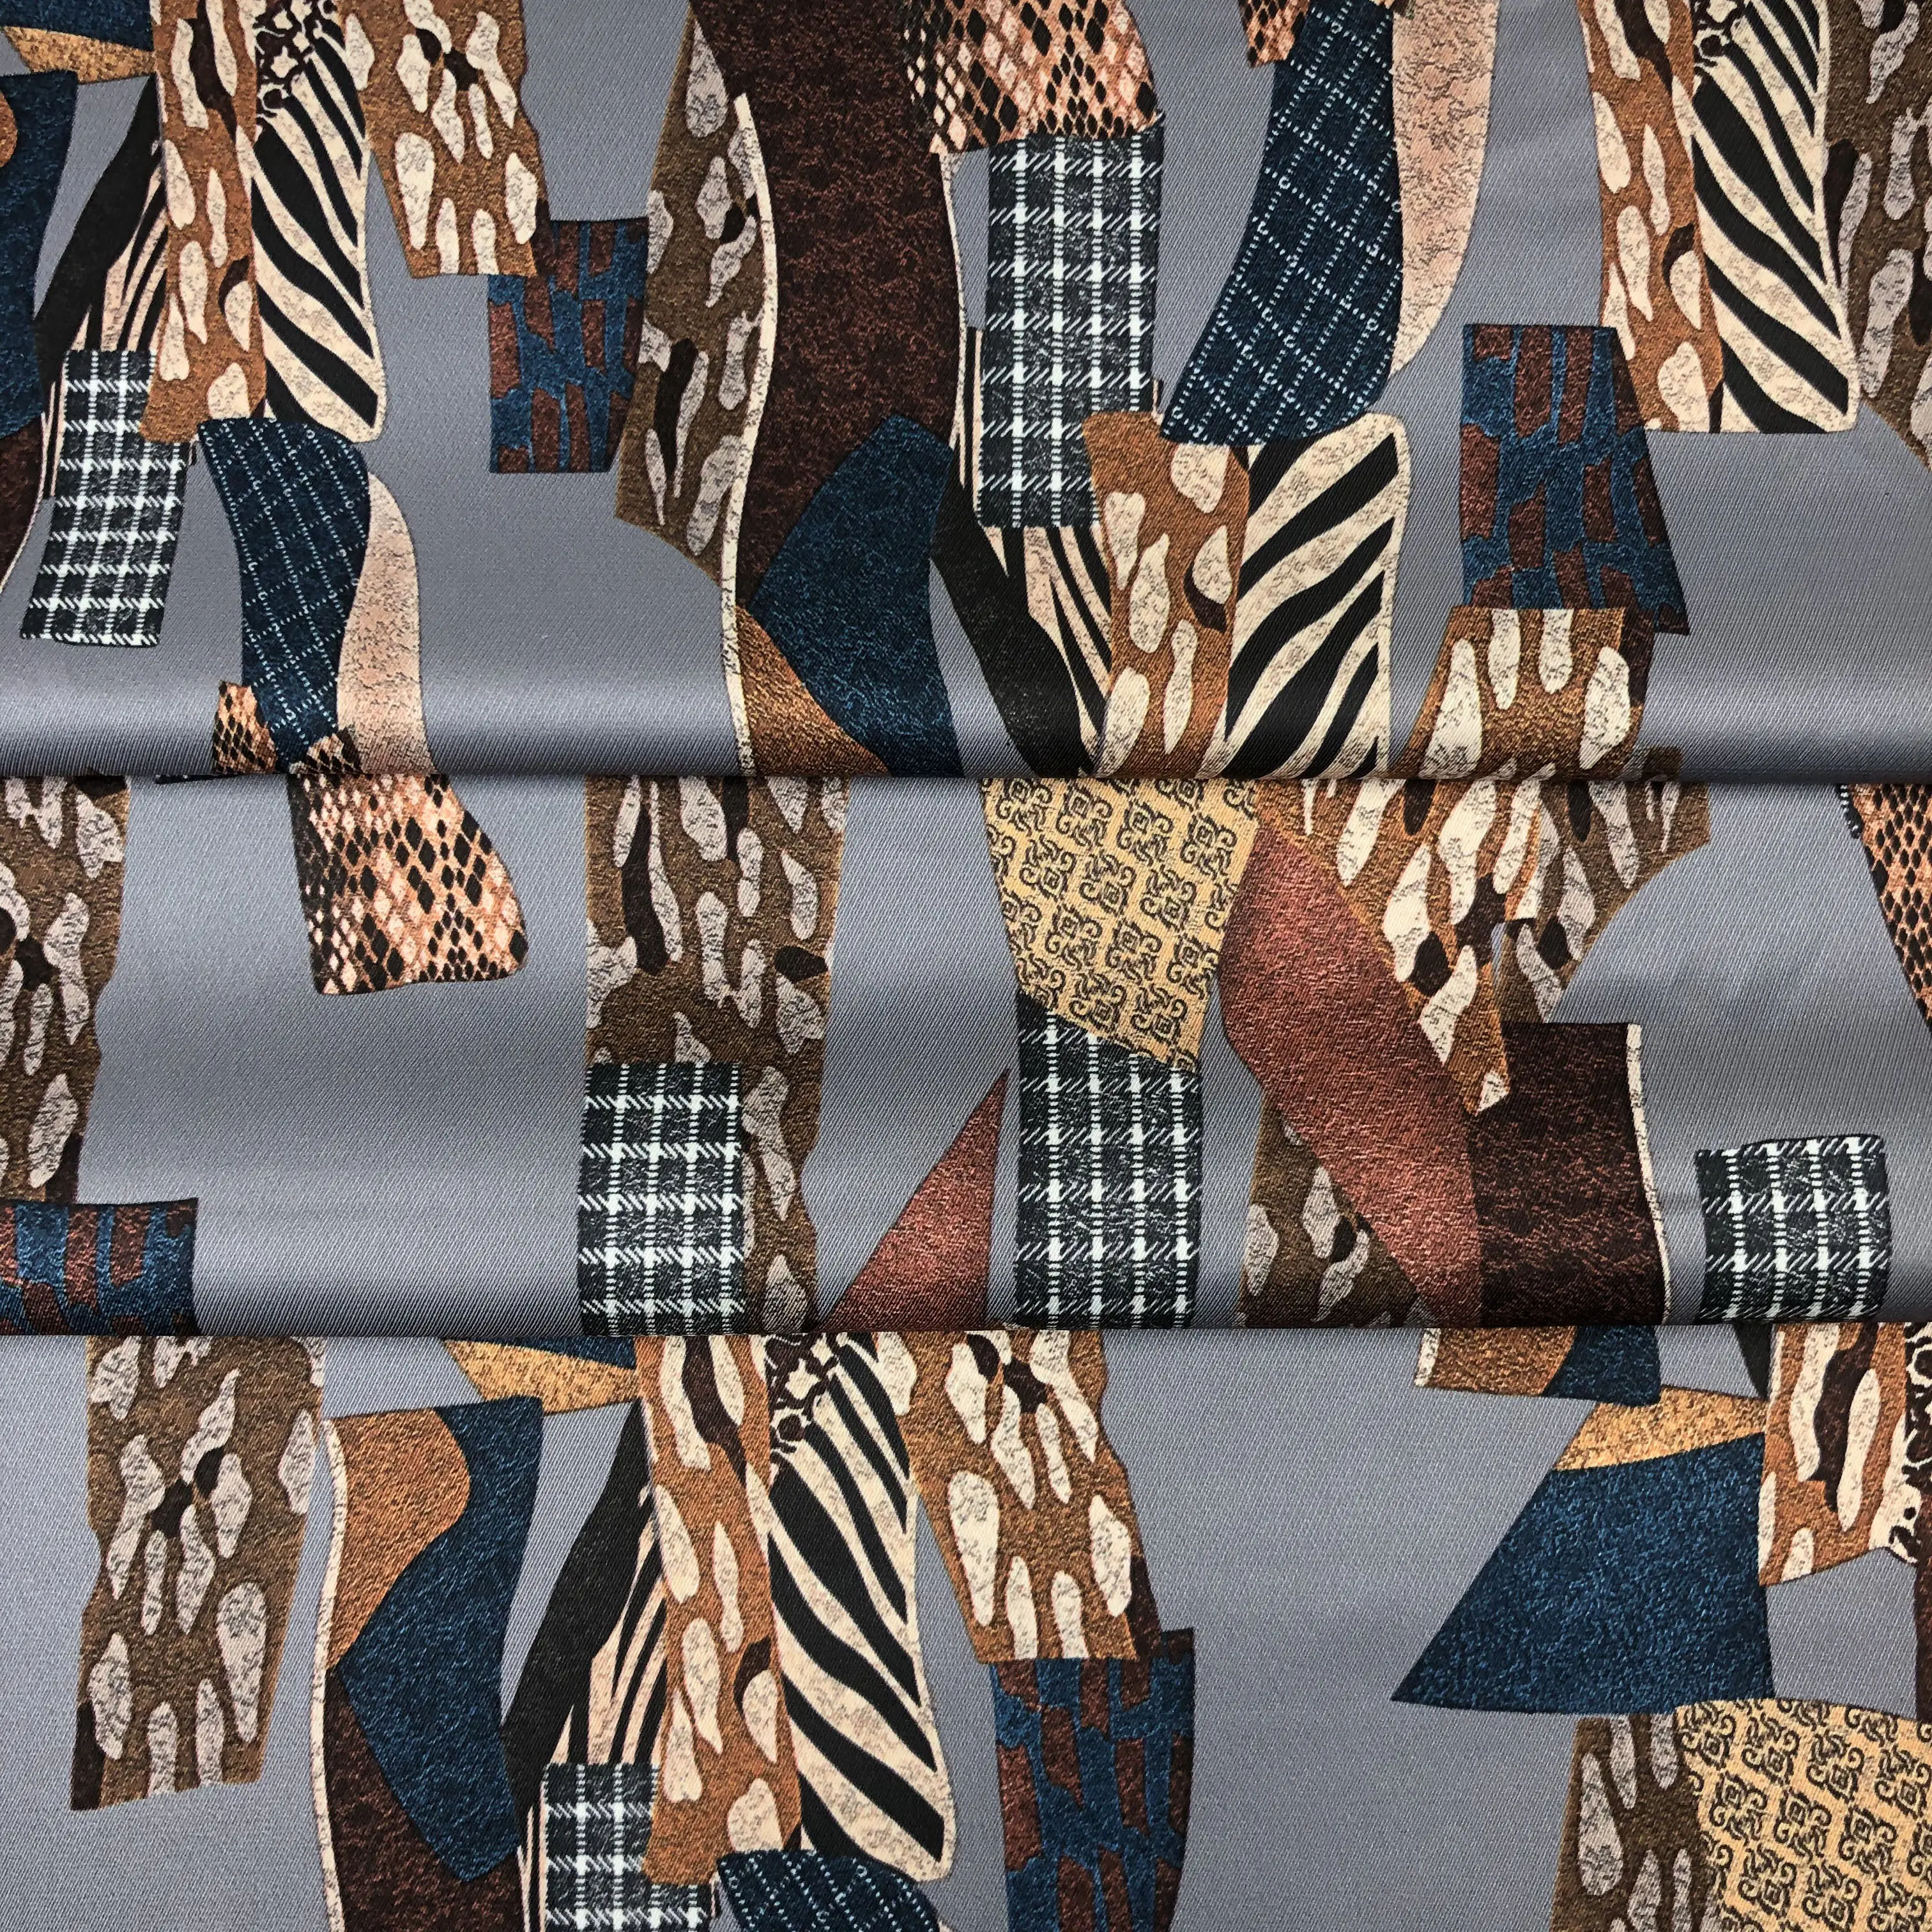 NO moq new patterns New designs Special personalities digital print twill silk satin fabric for ladys shirt